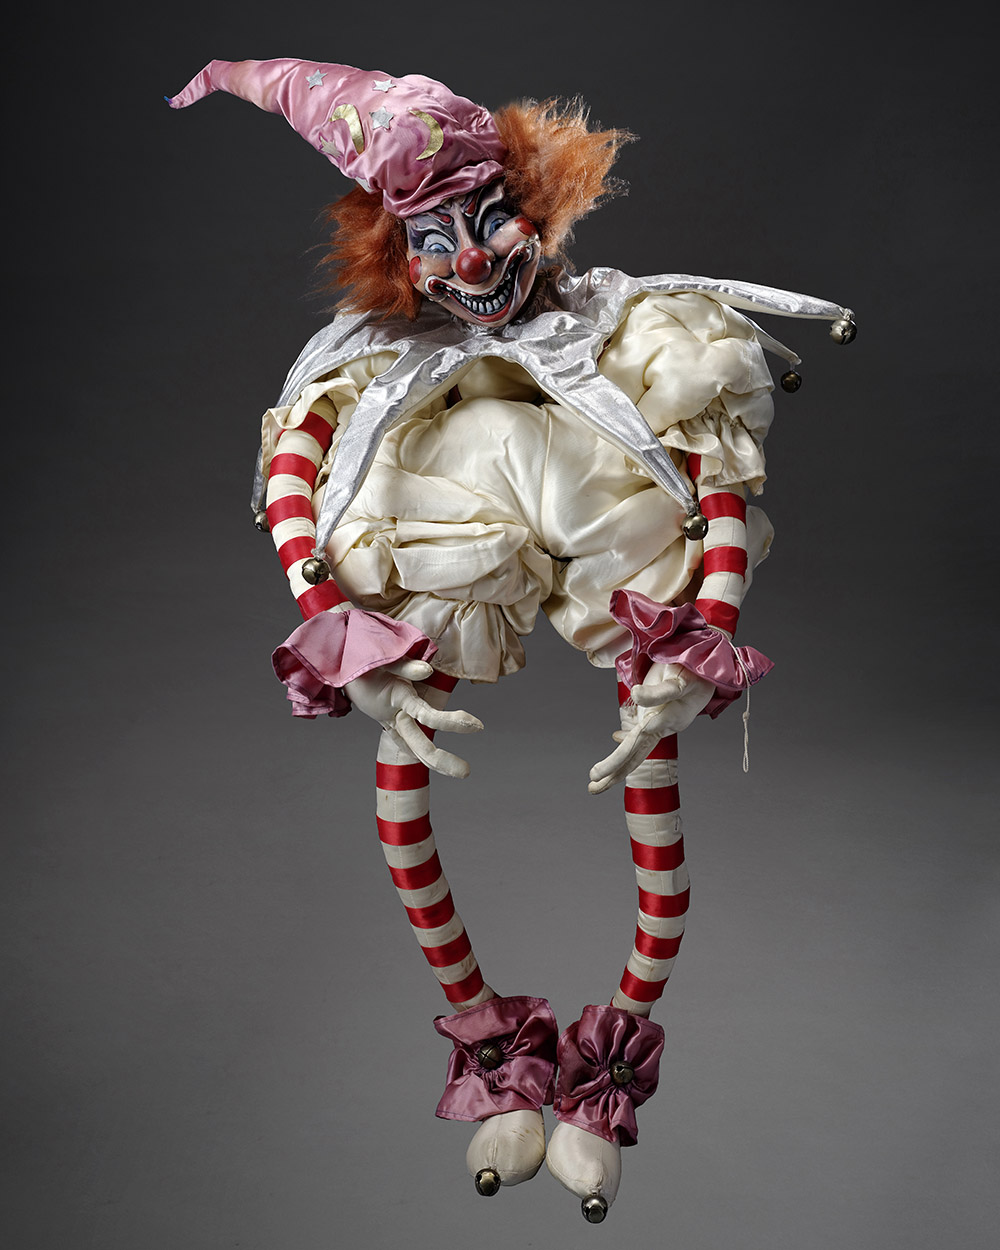 Poltergeist evil clown doll